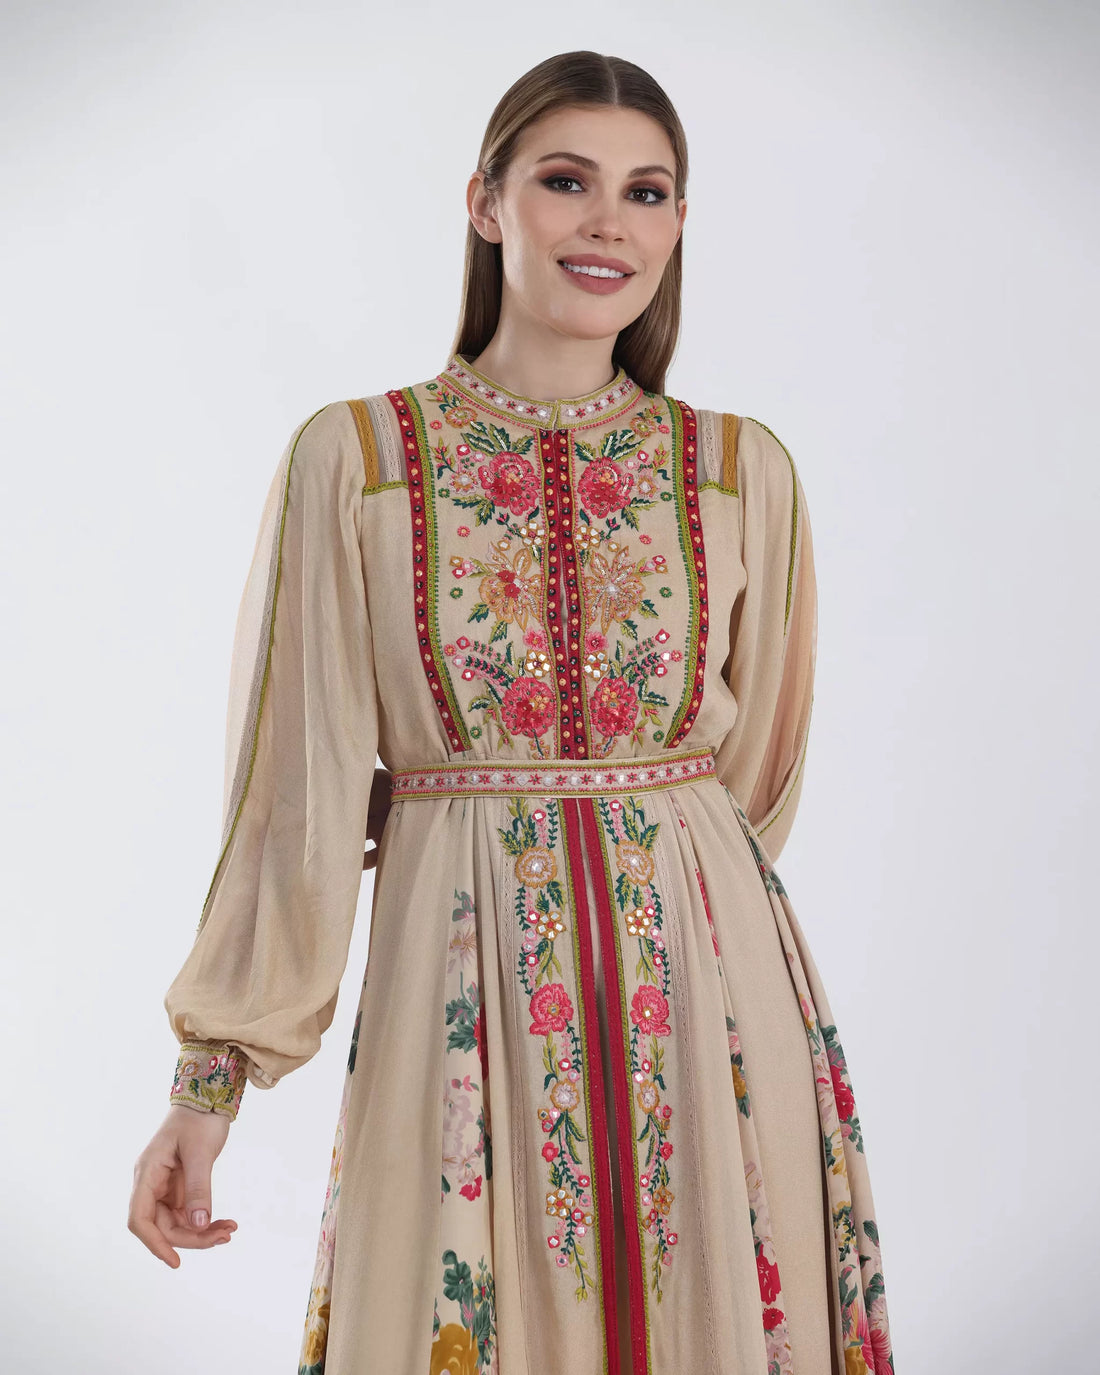 Areem dress